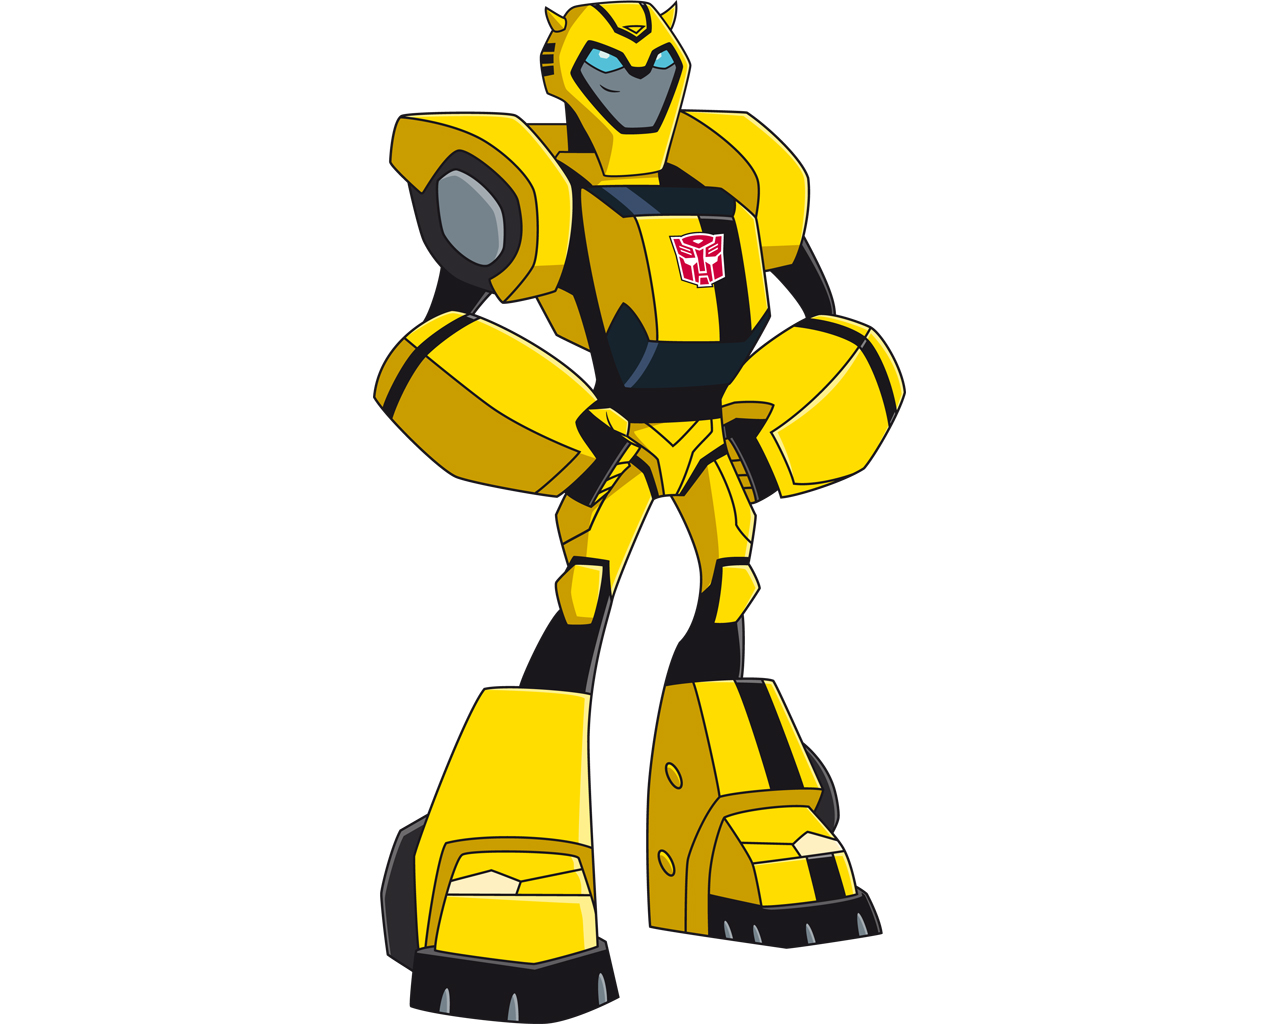 Bumblebee - The Transformers Photo (36965979) - Fanpop